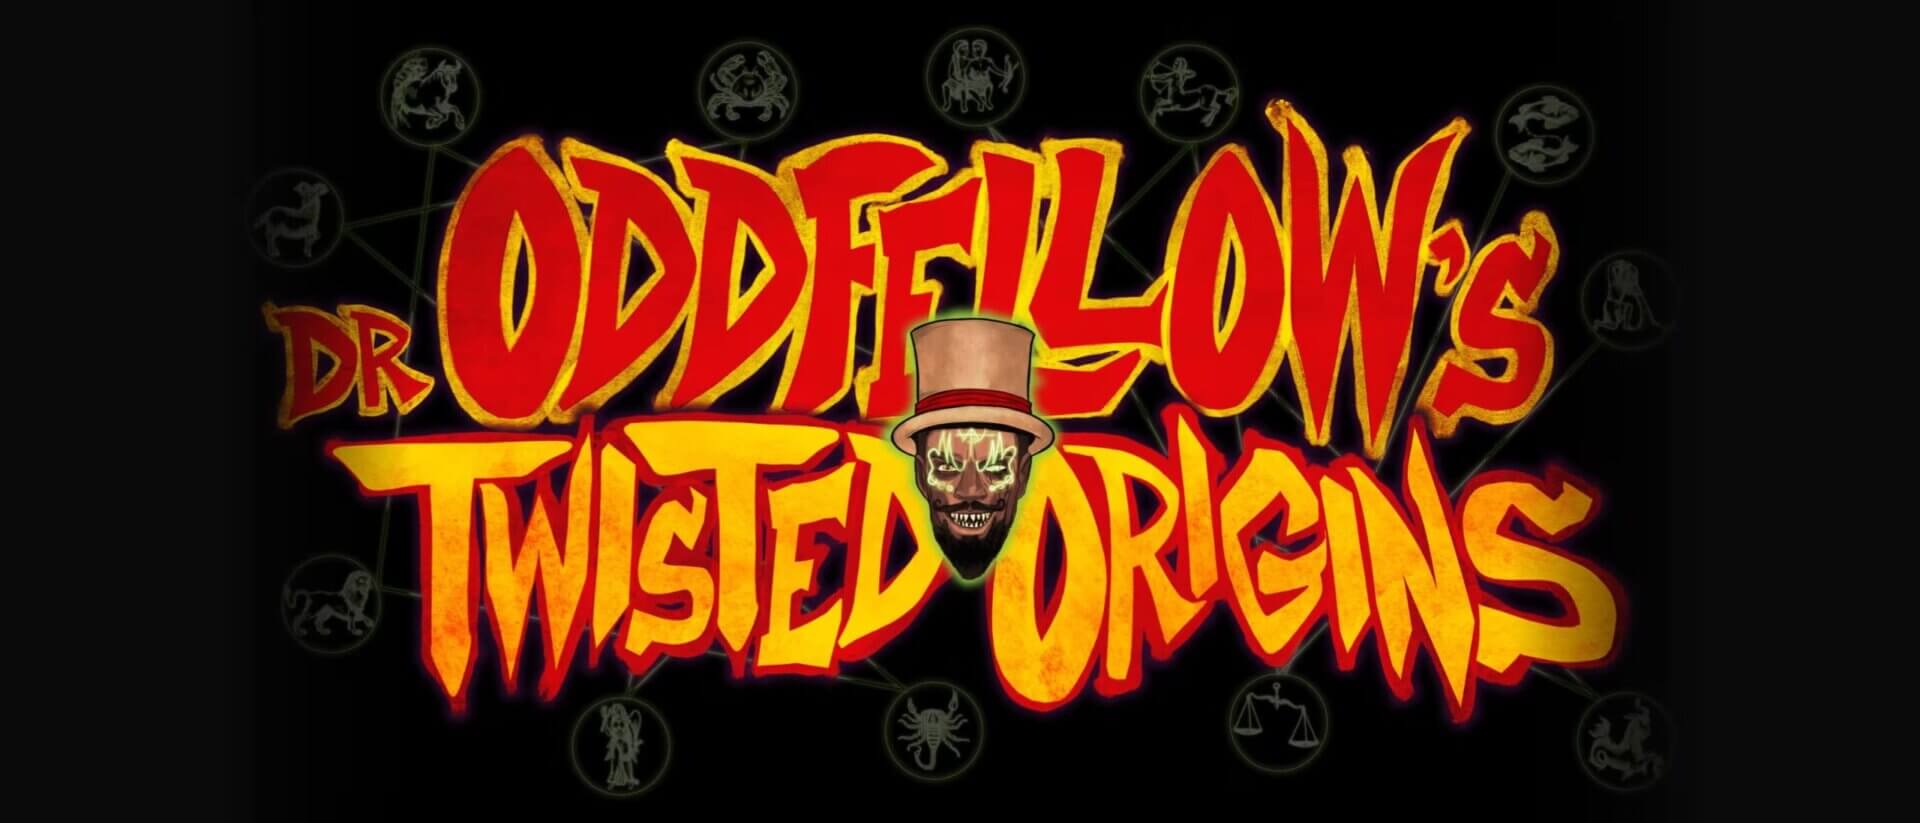 Dr. Oddfellows Twisted Origins